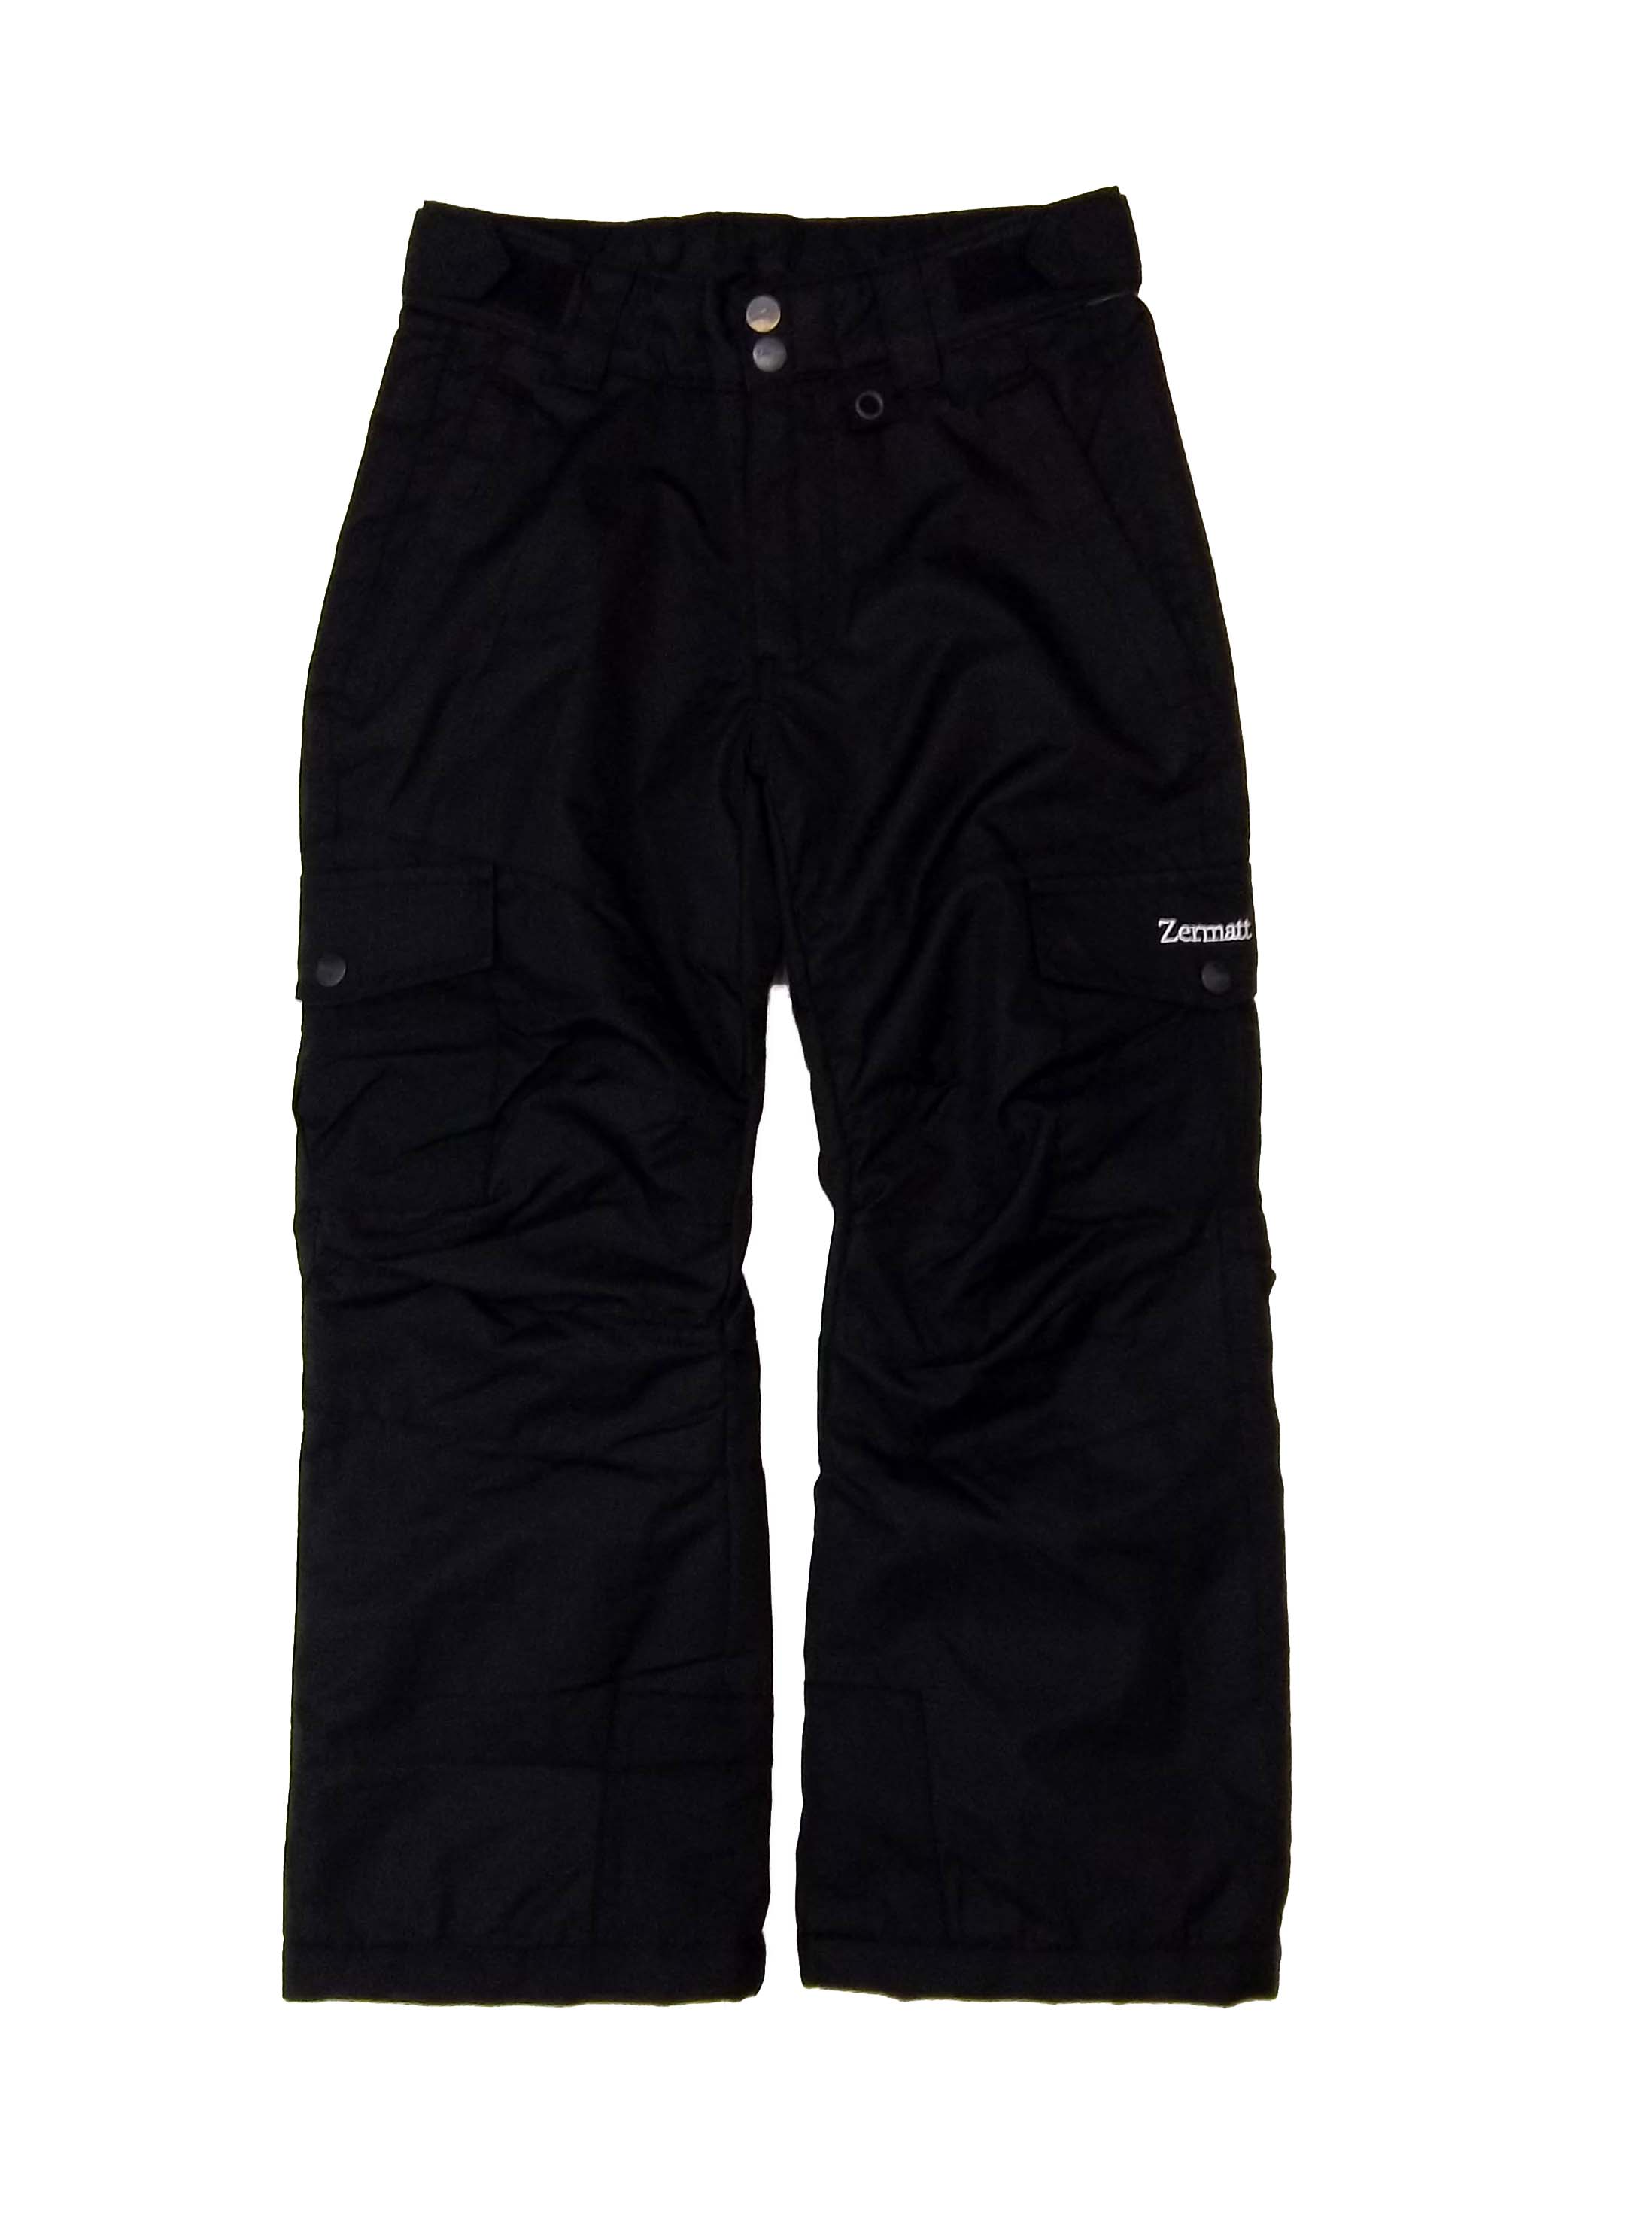 Zermatt Youth Insulated Ski Pants, Black/White